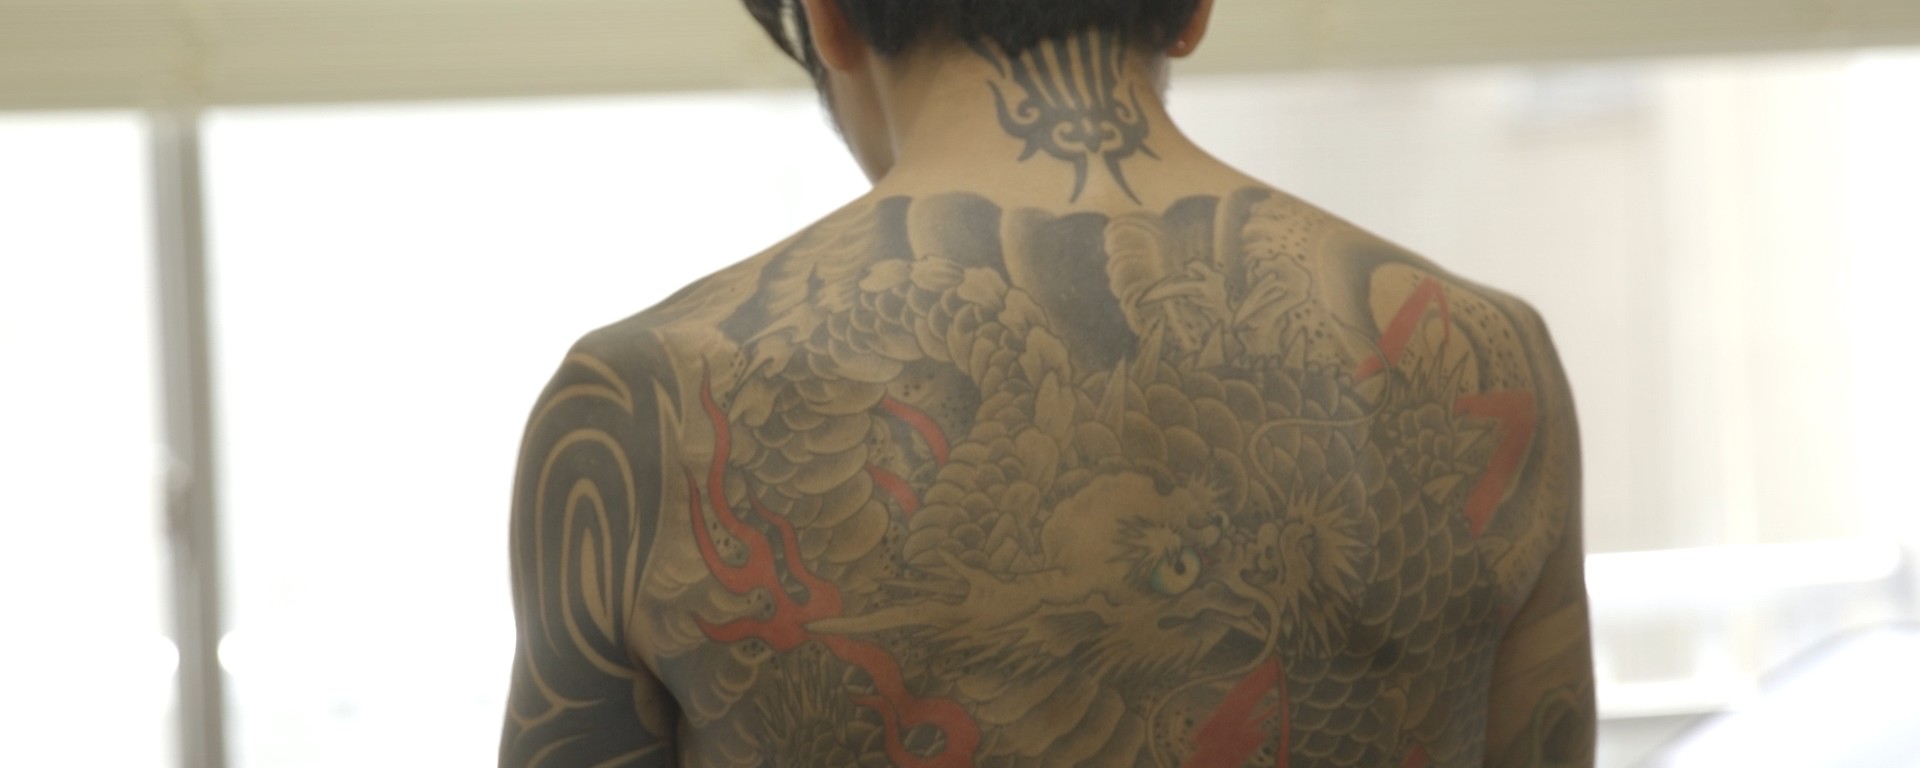 Bedeutung frau mit tigerkopf tattoo Die besten